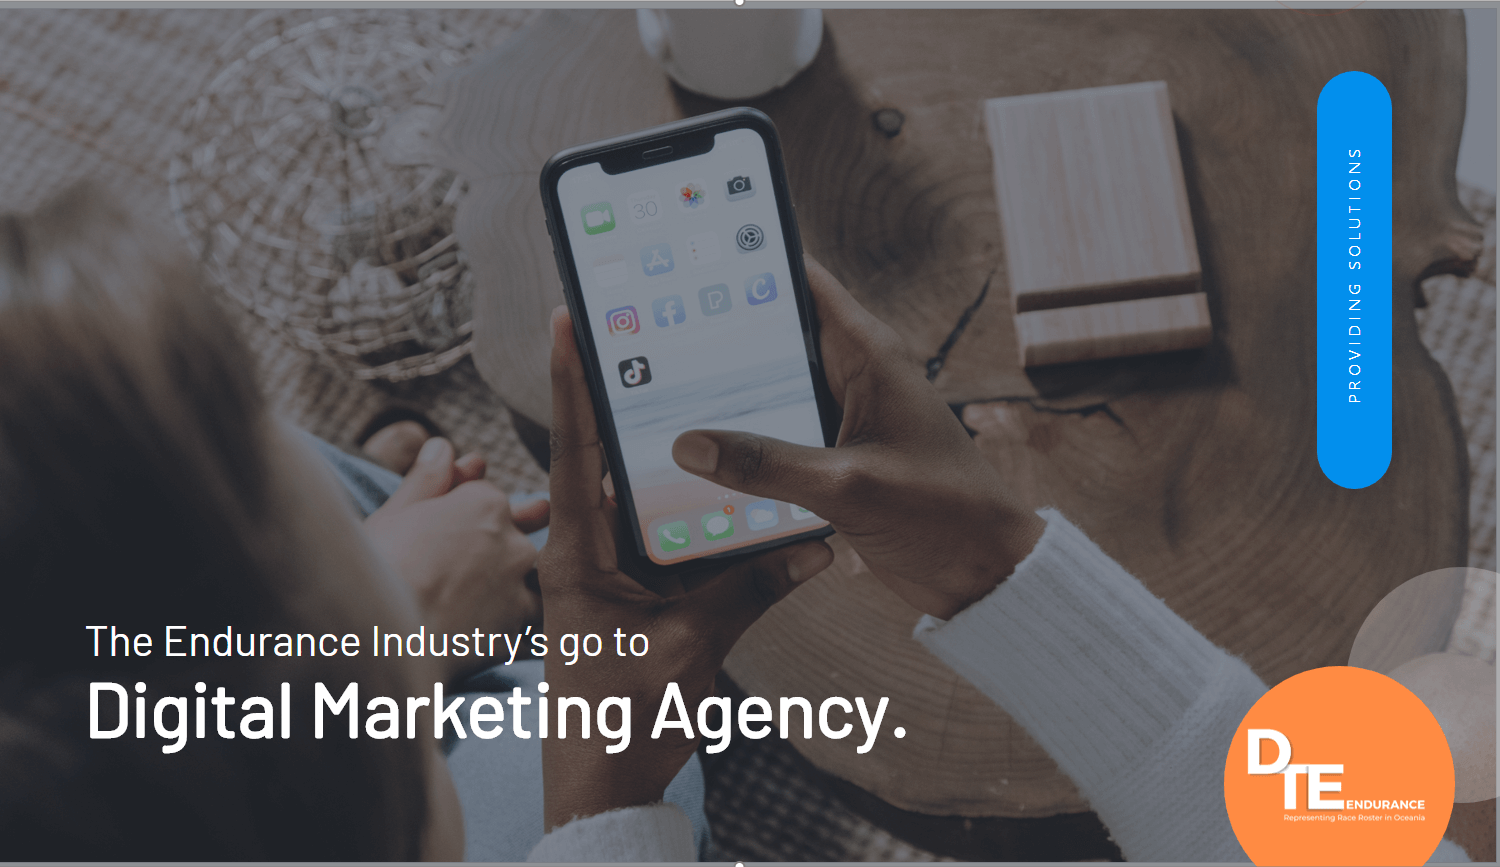 Applying Digital Marketing Strategy